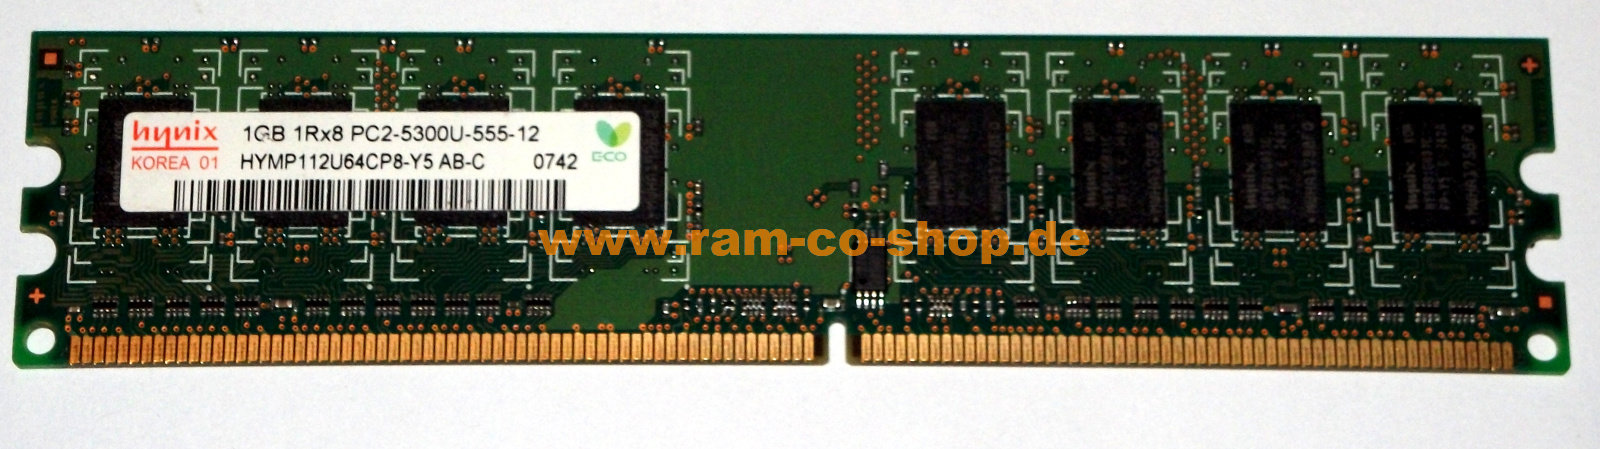 Hynix Mémoire RAM Hynix 1GB DDR2 PC2-5300U 667MHz 2Rx8 CL5 DIMM HYMP512U64CP8-Y5 